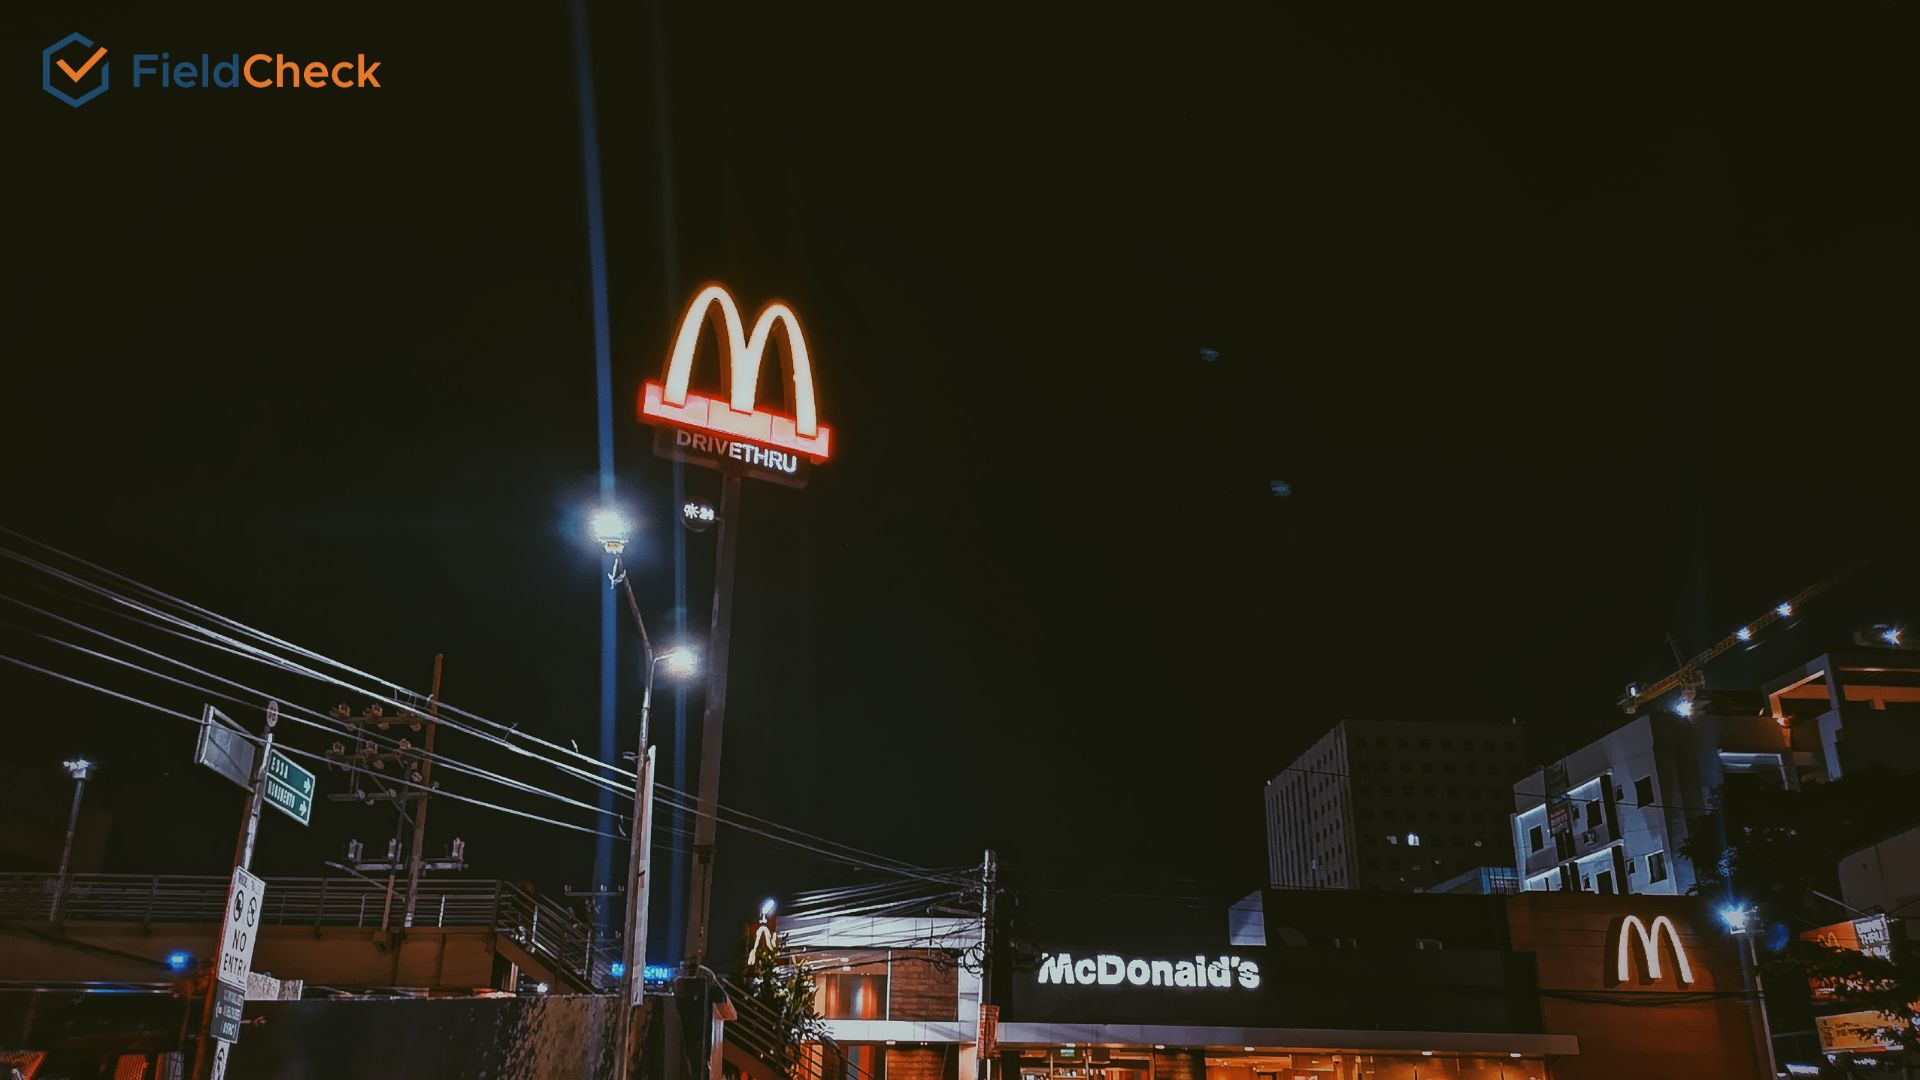 McDonalds' outdoor signage